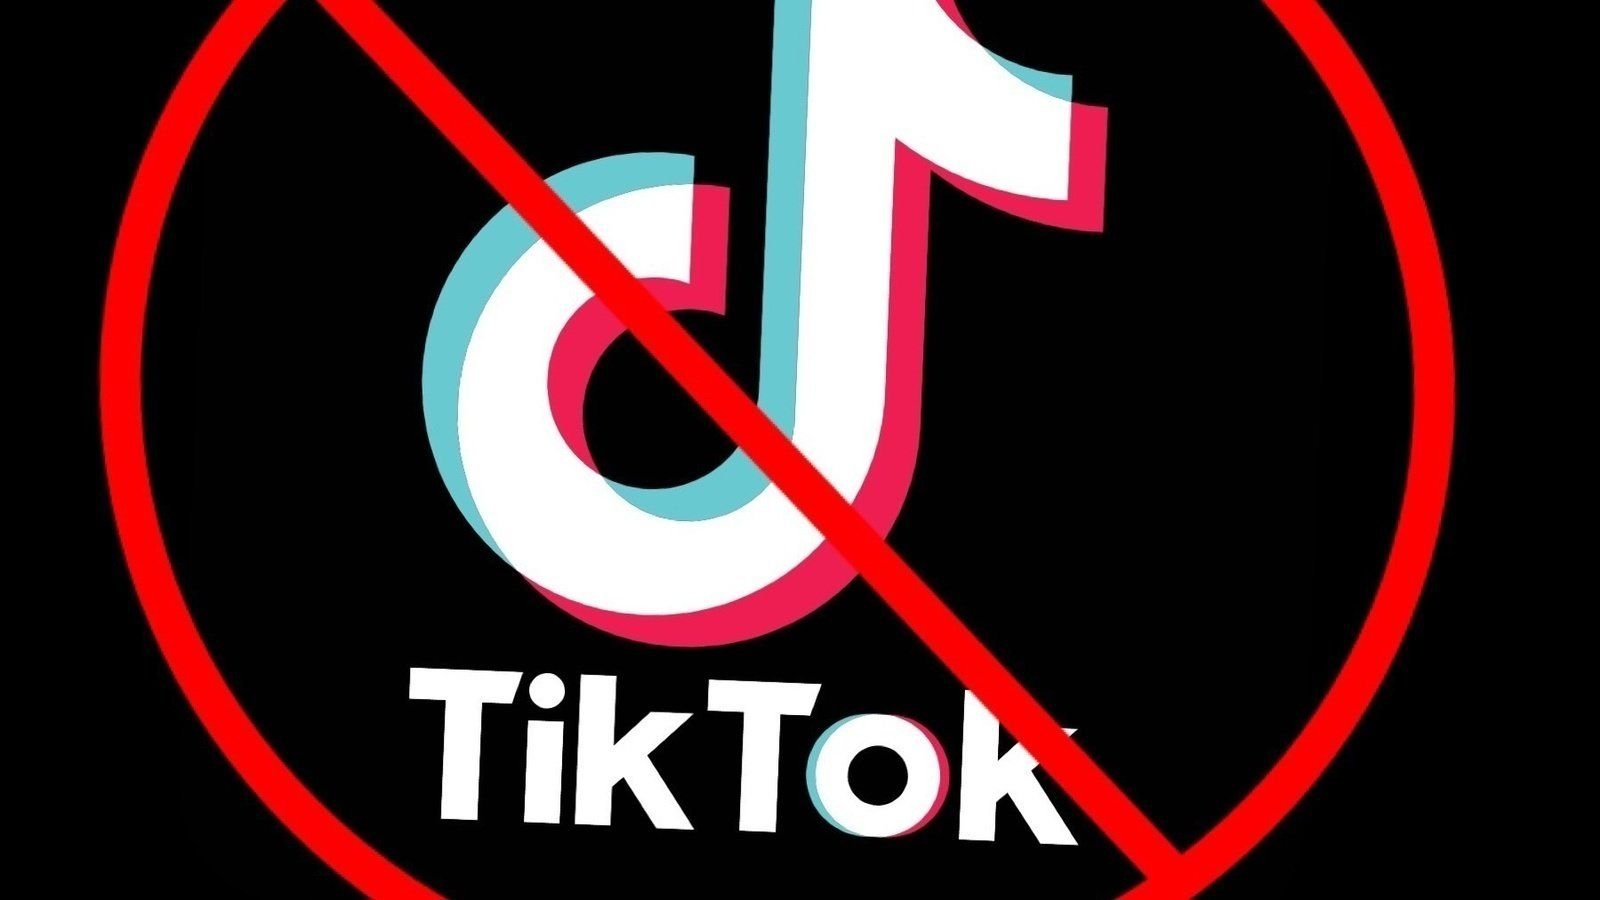 Petition · I want to shut down TikTok. · Change.org